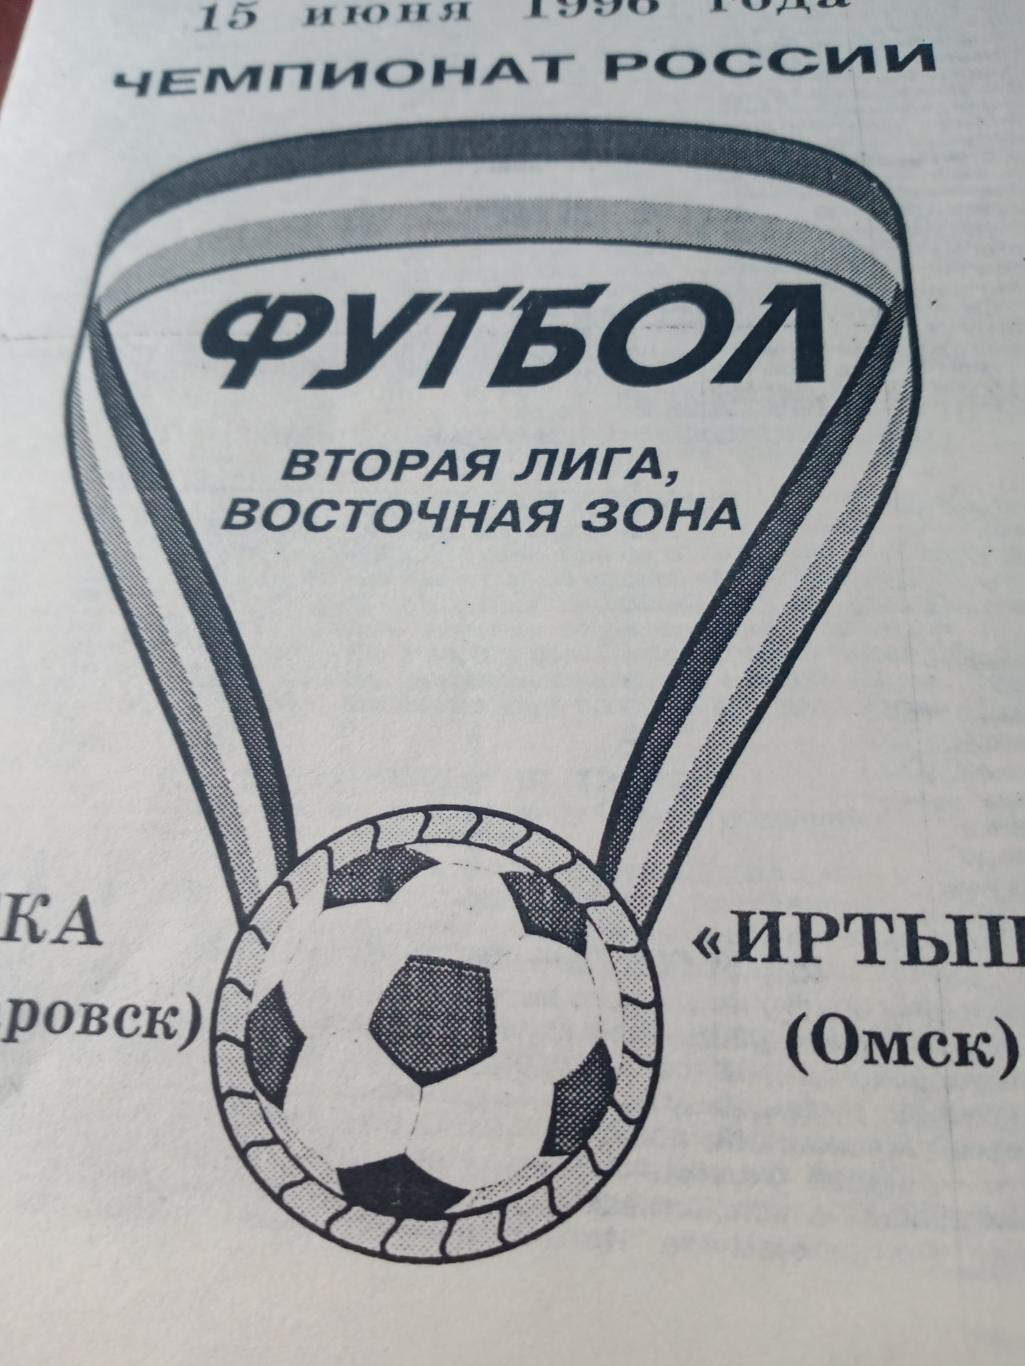 СКА Хабаровск - Иртыш Омск. 15 июня 1996 год